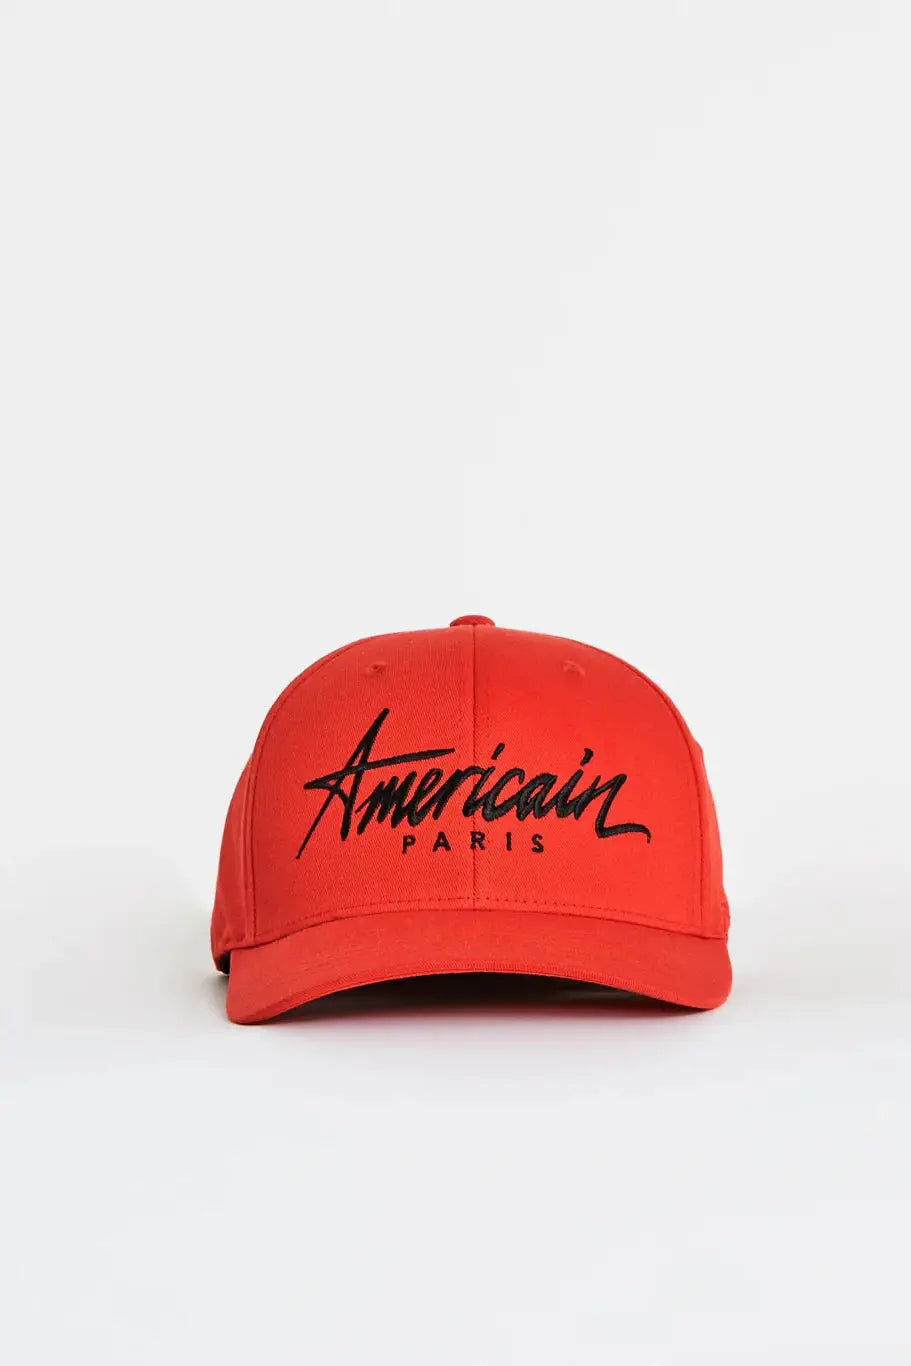 Americain sky high cap - red